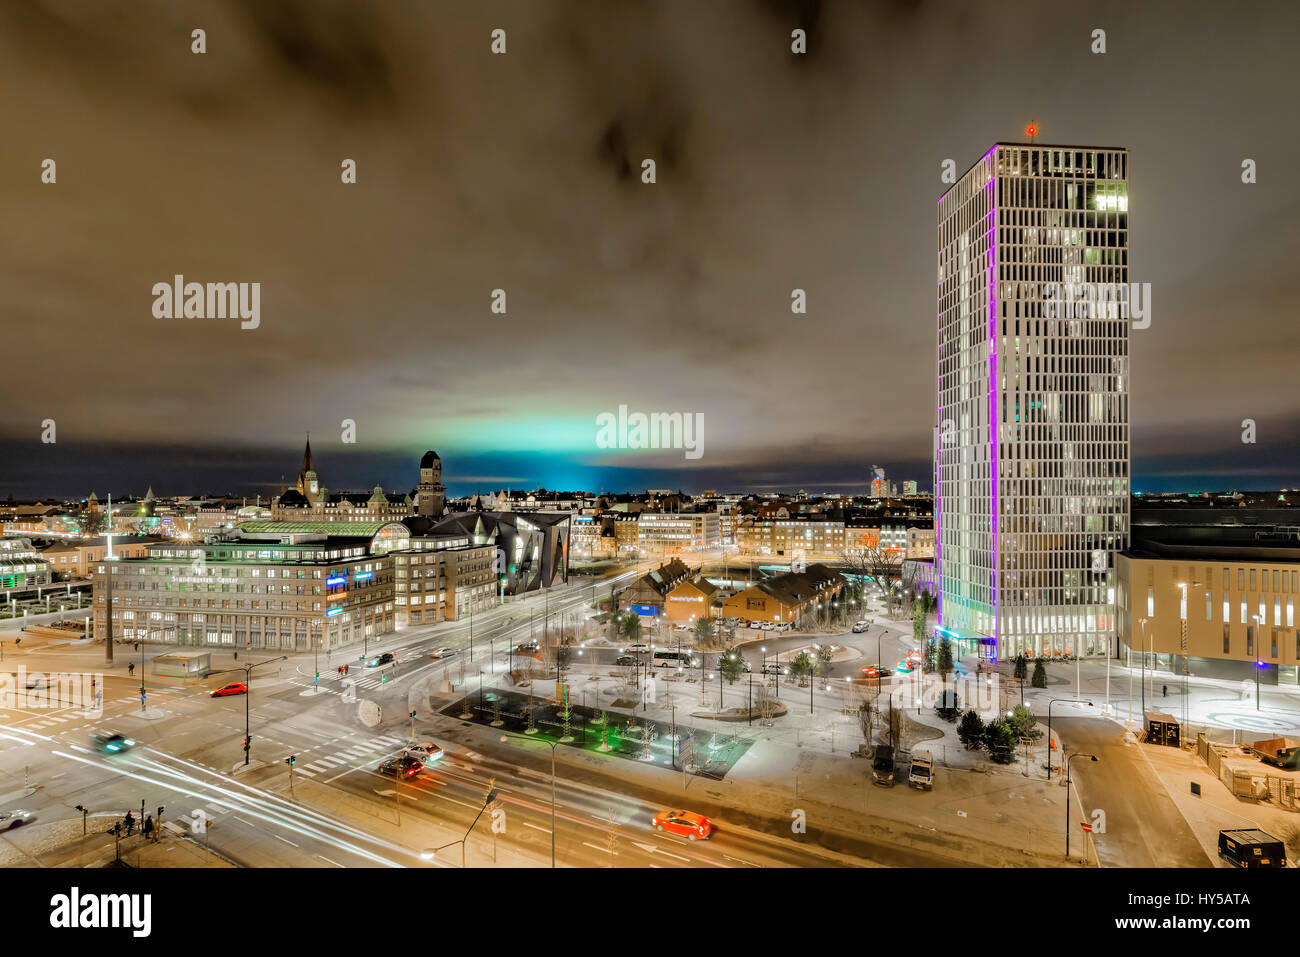 Sweden, Skane, Malmo, Malmo Live building illuminated at night Stock Photo